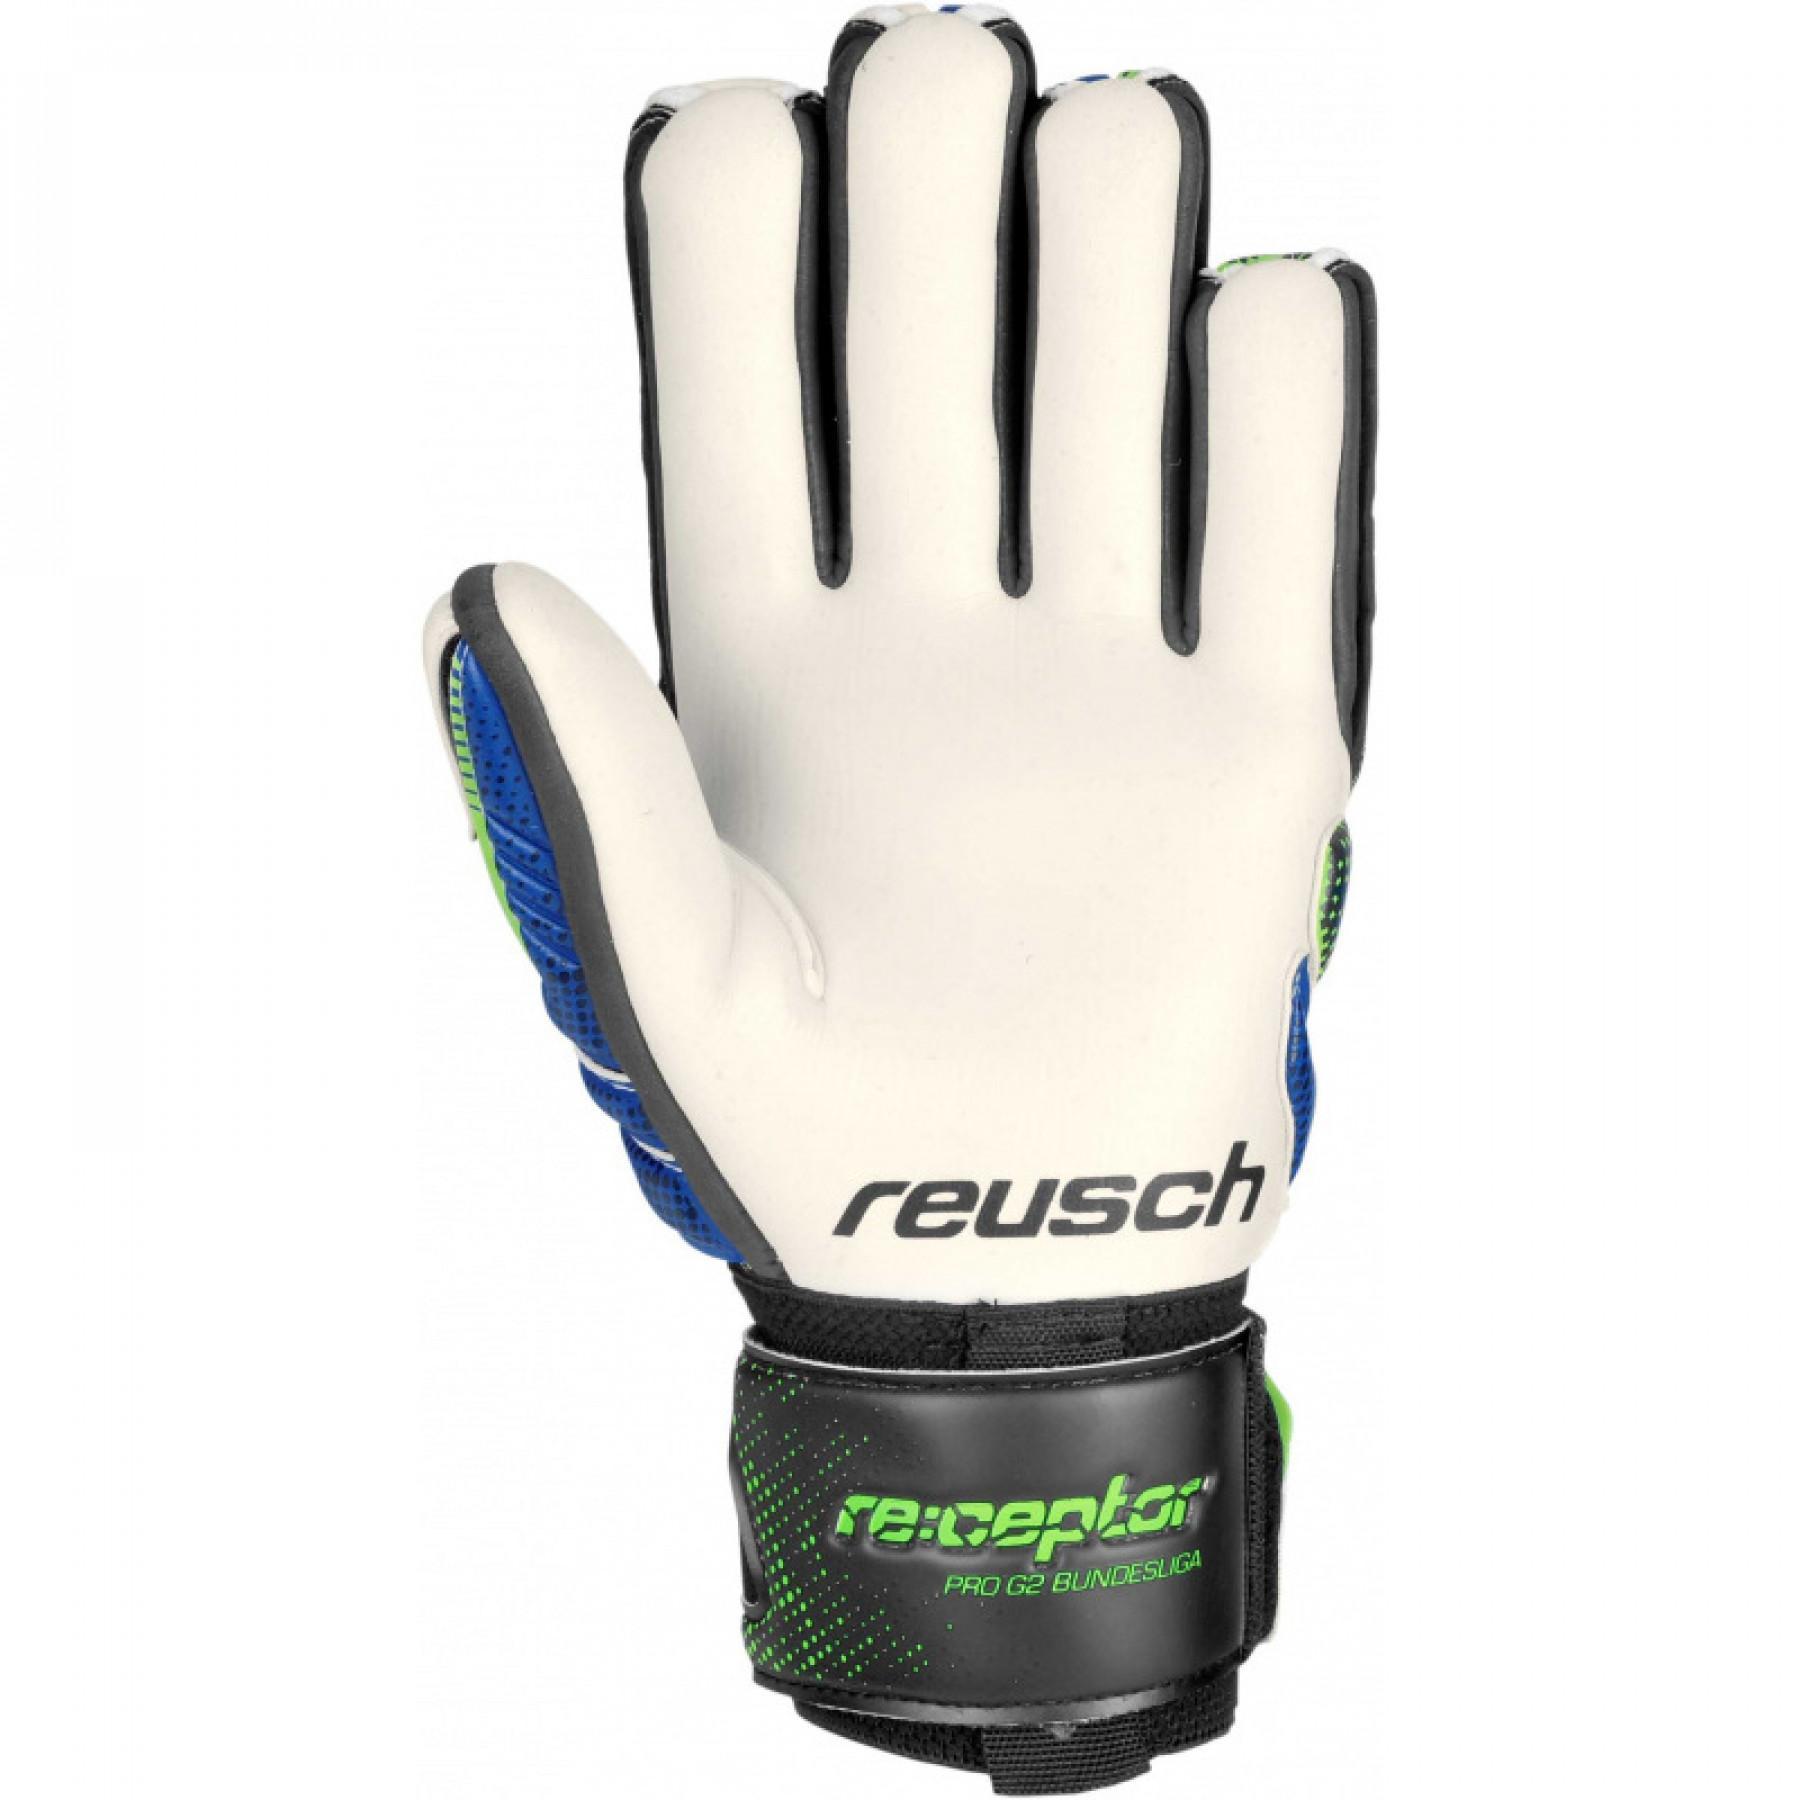 Gloves Reusch Re:ceptor Pro G2 Bundesliga